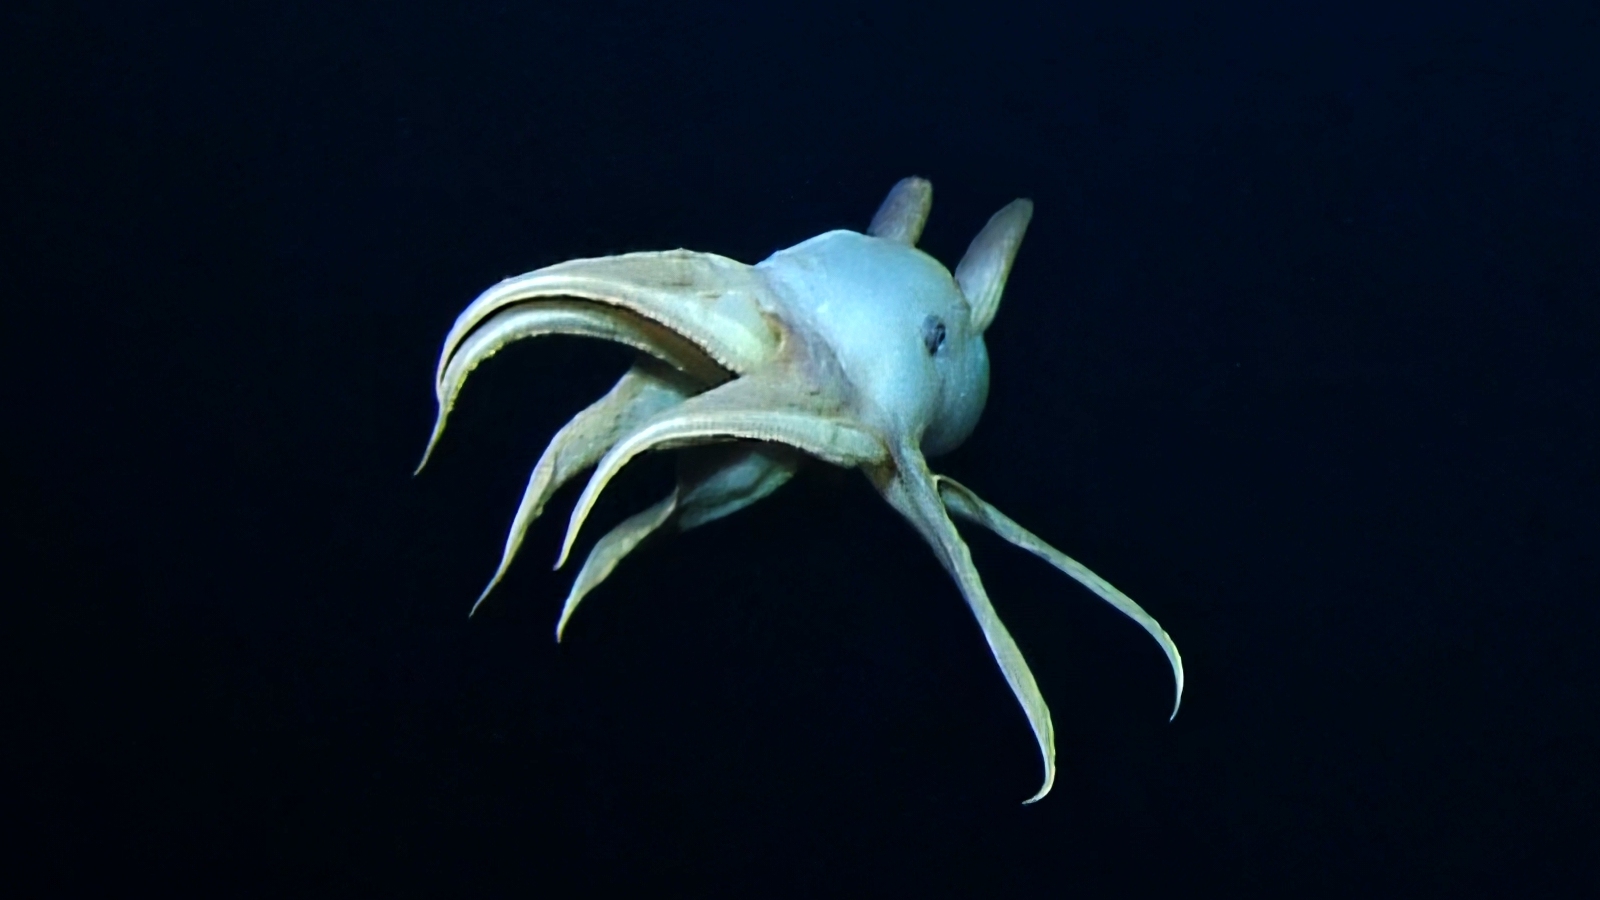 The dumbo octopus swimming through the dark deep sea